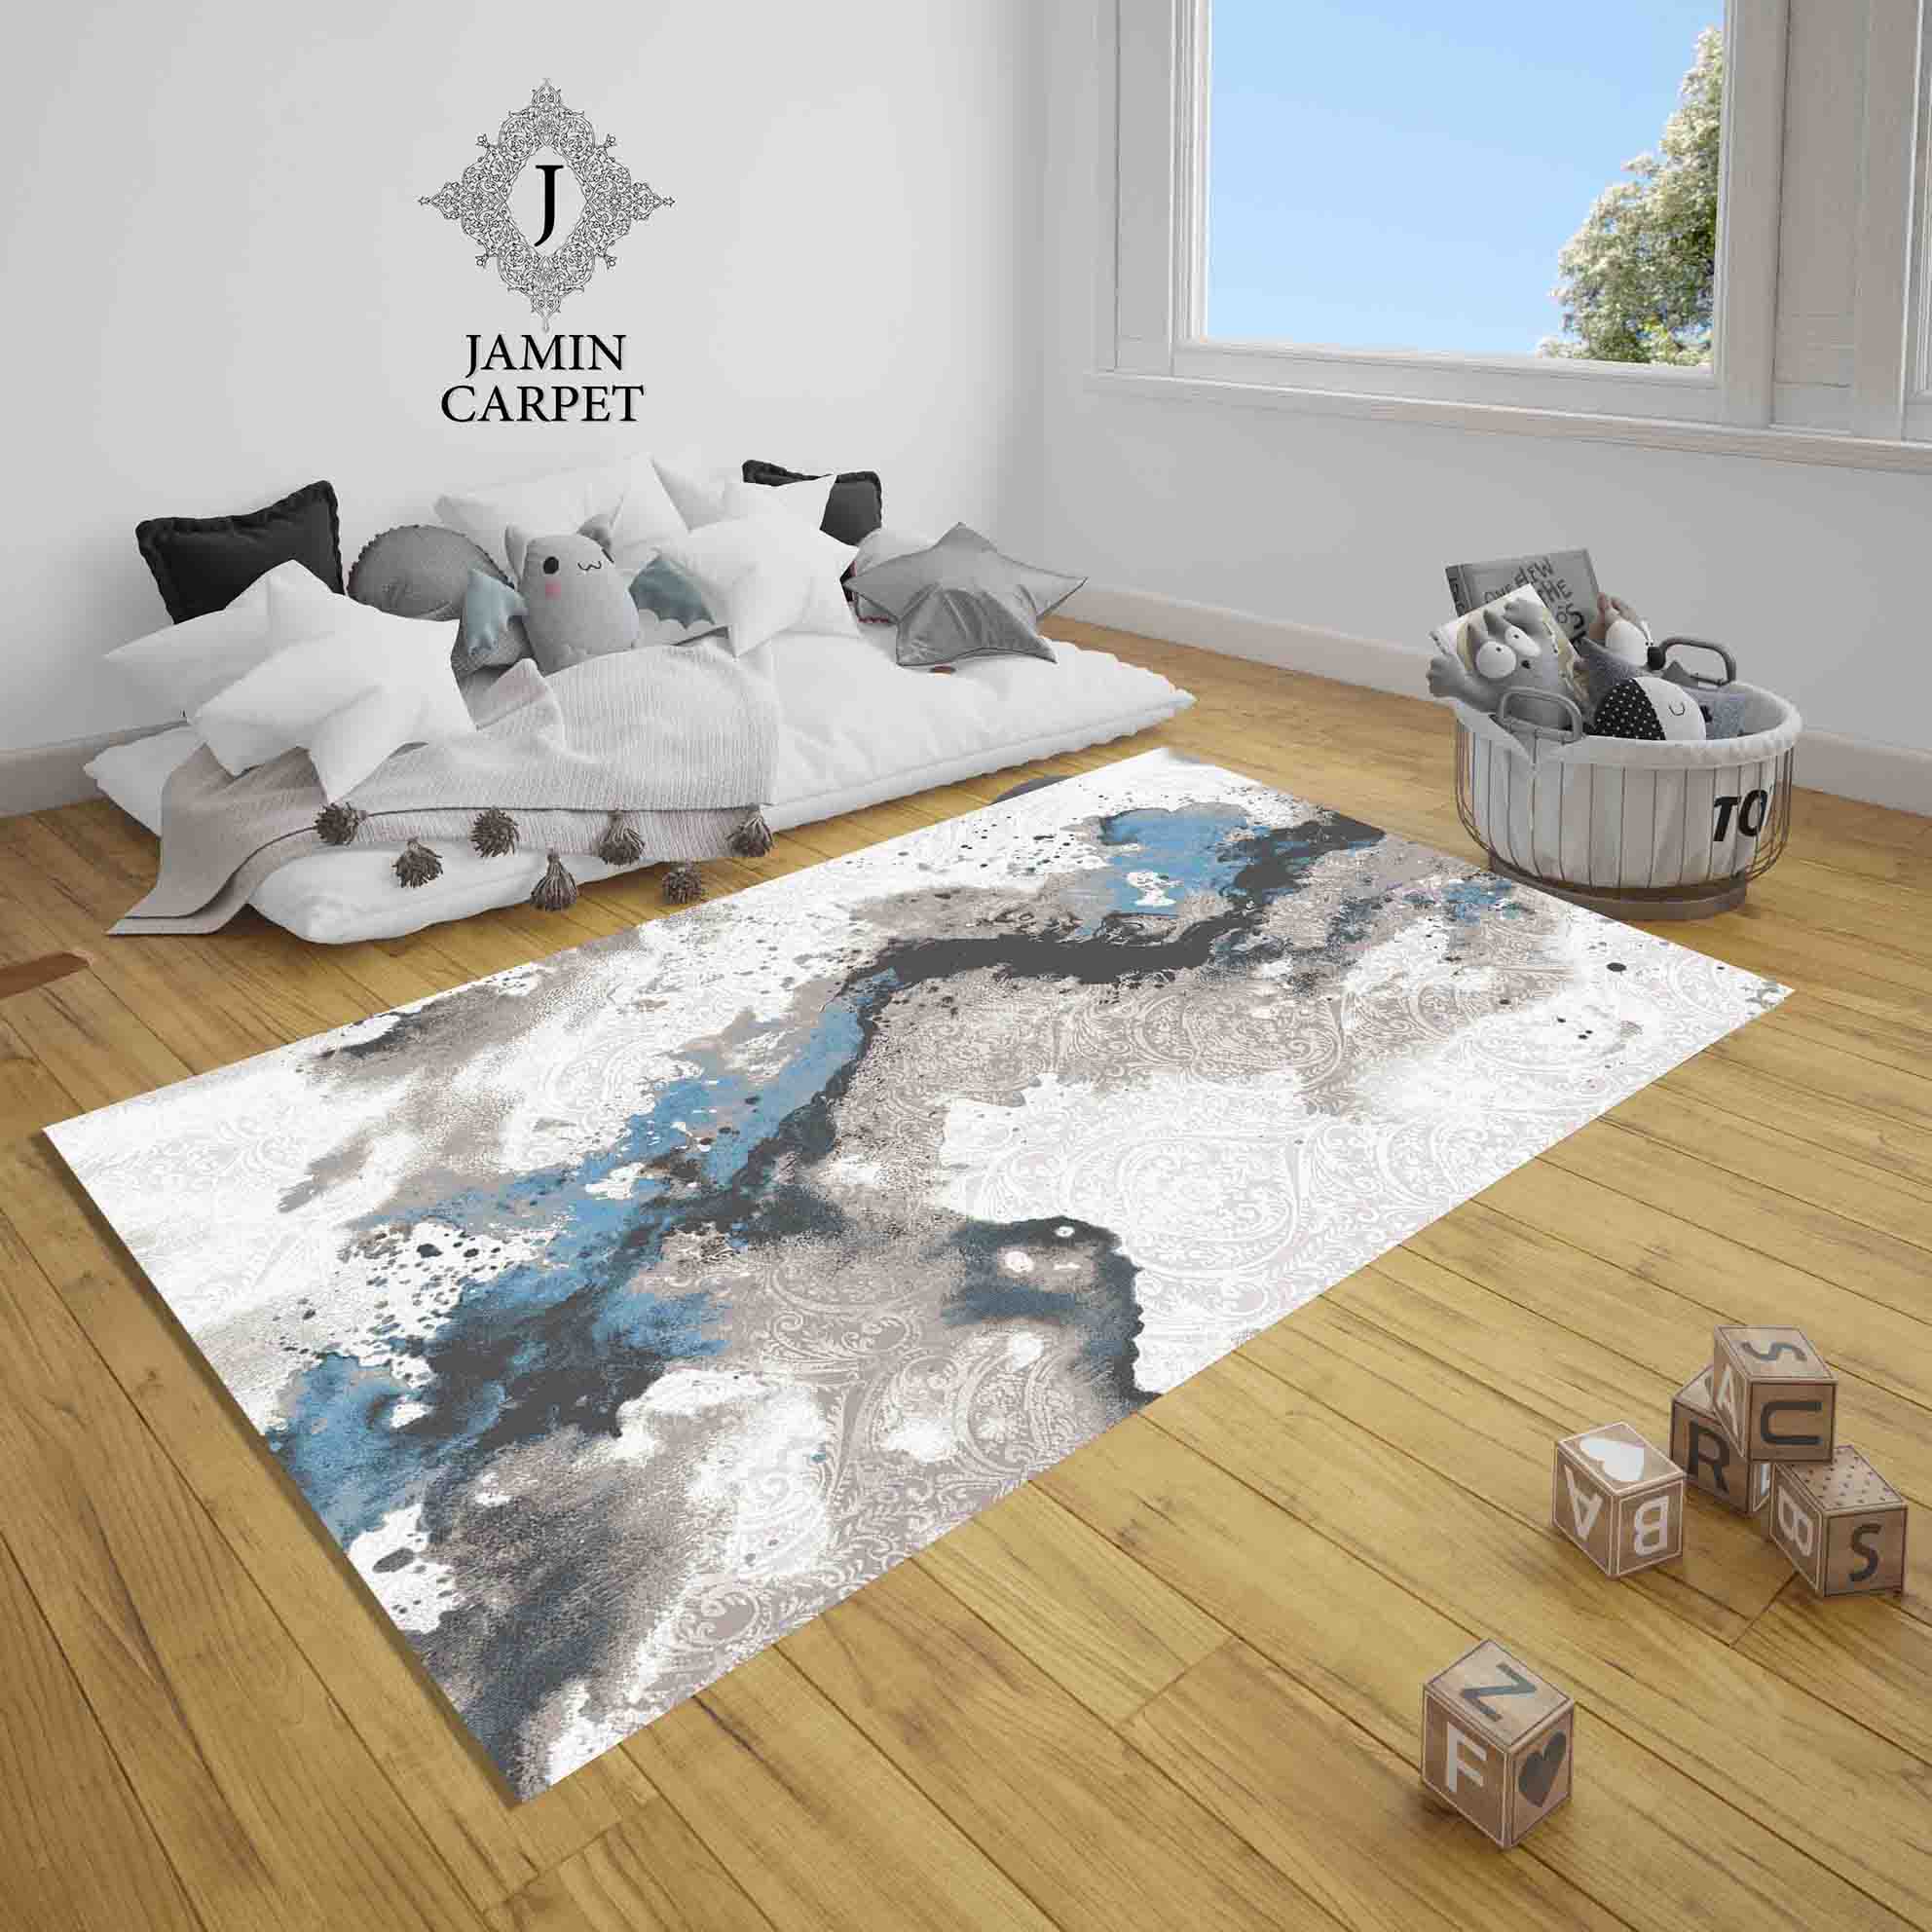 Fantasy carpet, code 280, comb 400, density 1800, all acrylic